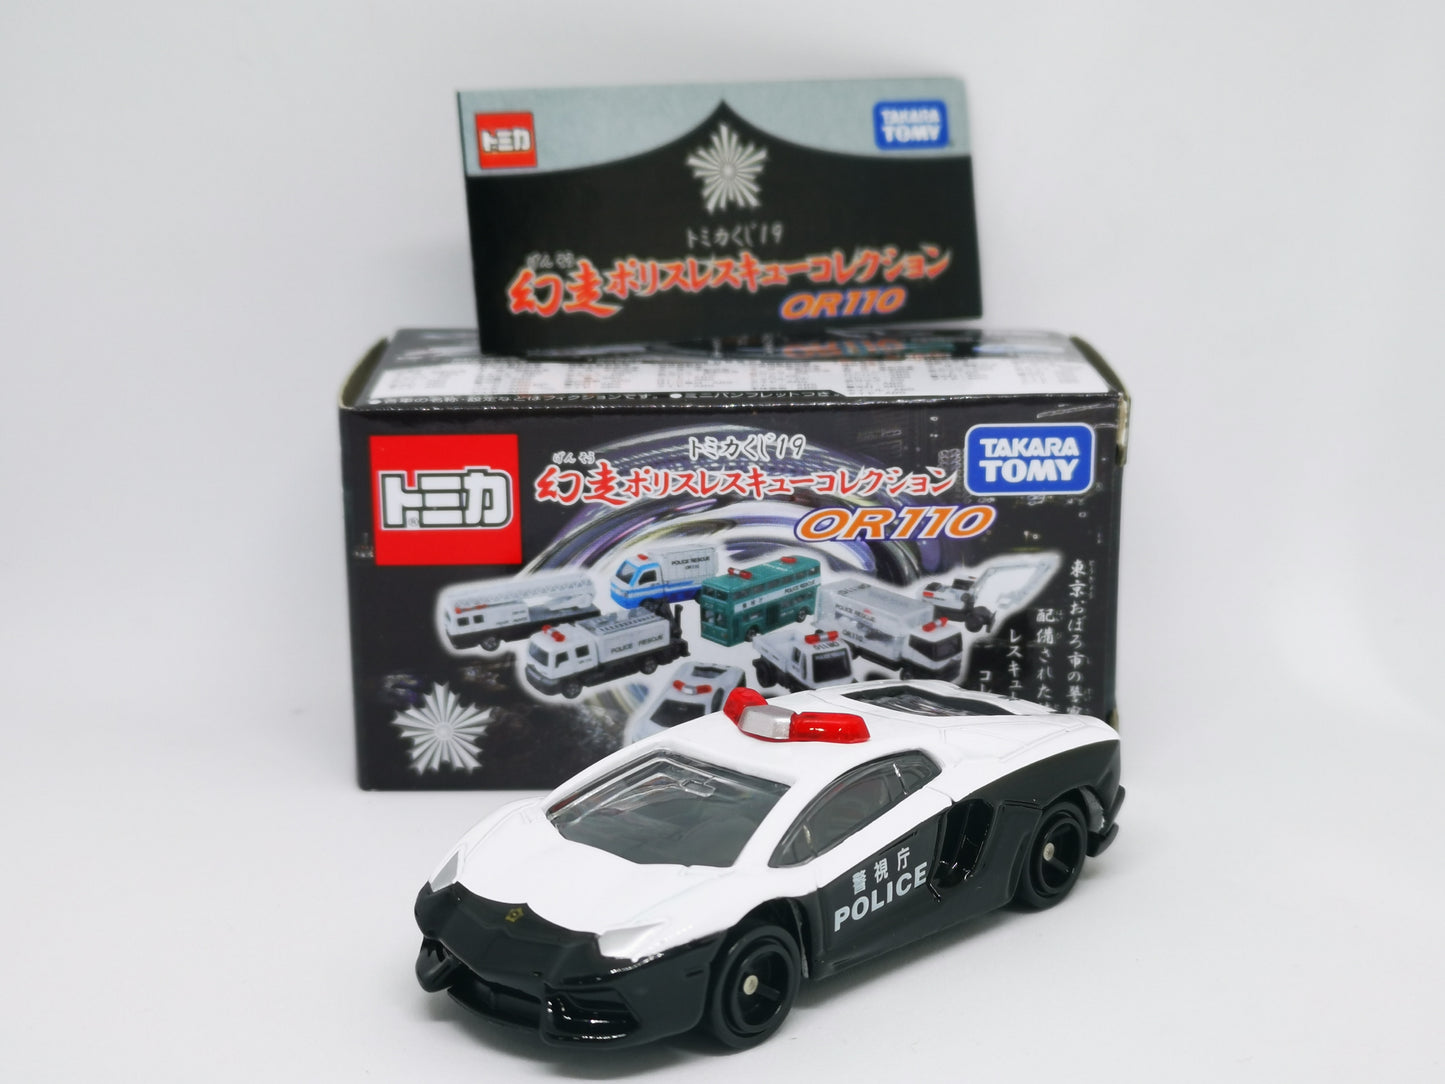 Tomica Lottery Vol.19 Lamborghini Aventador LP700-4
Japan Police Car